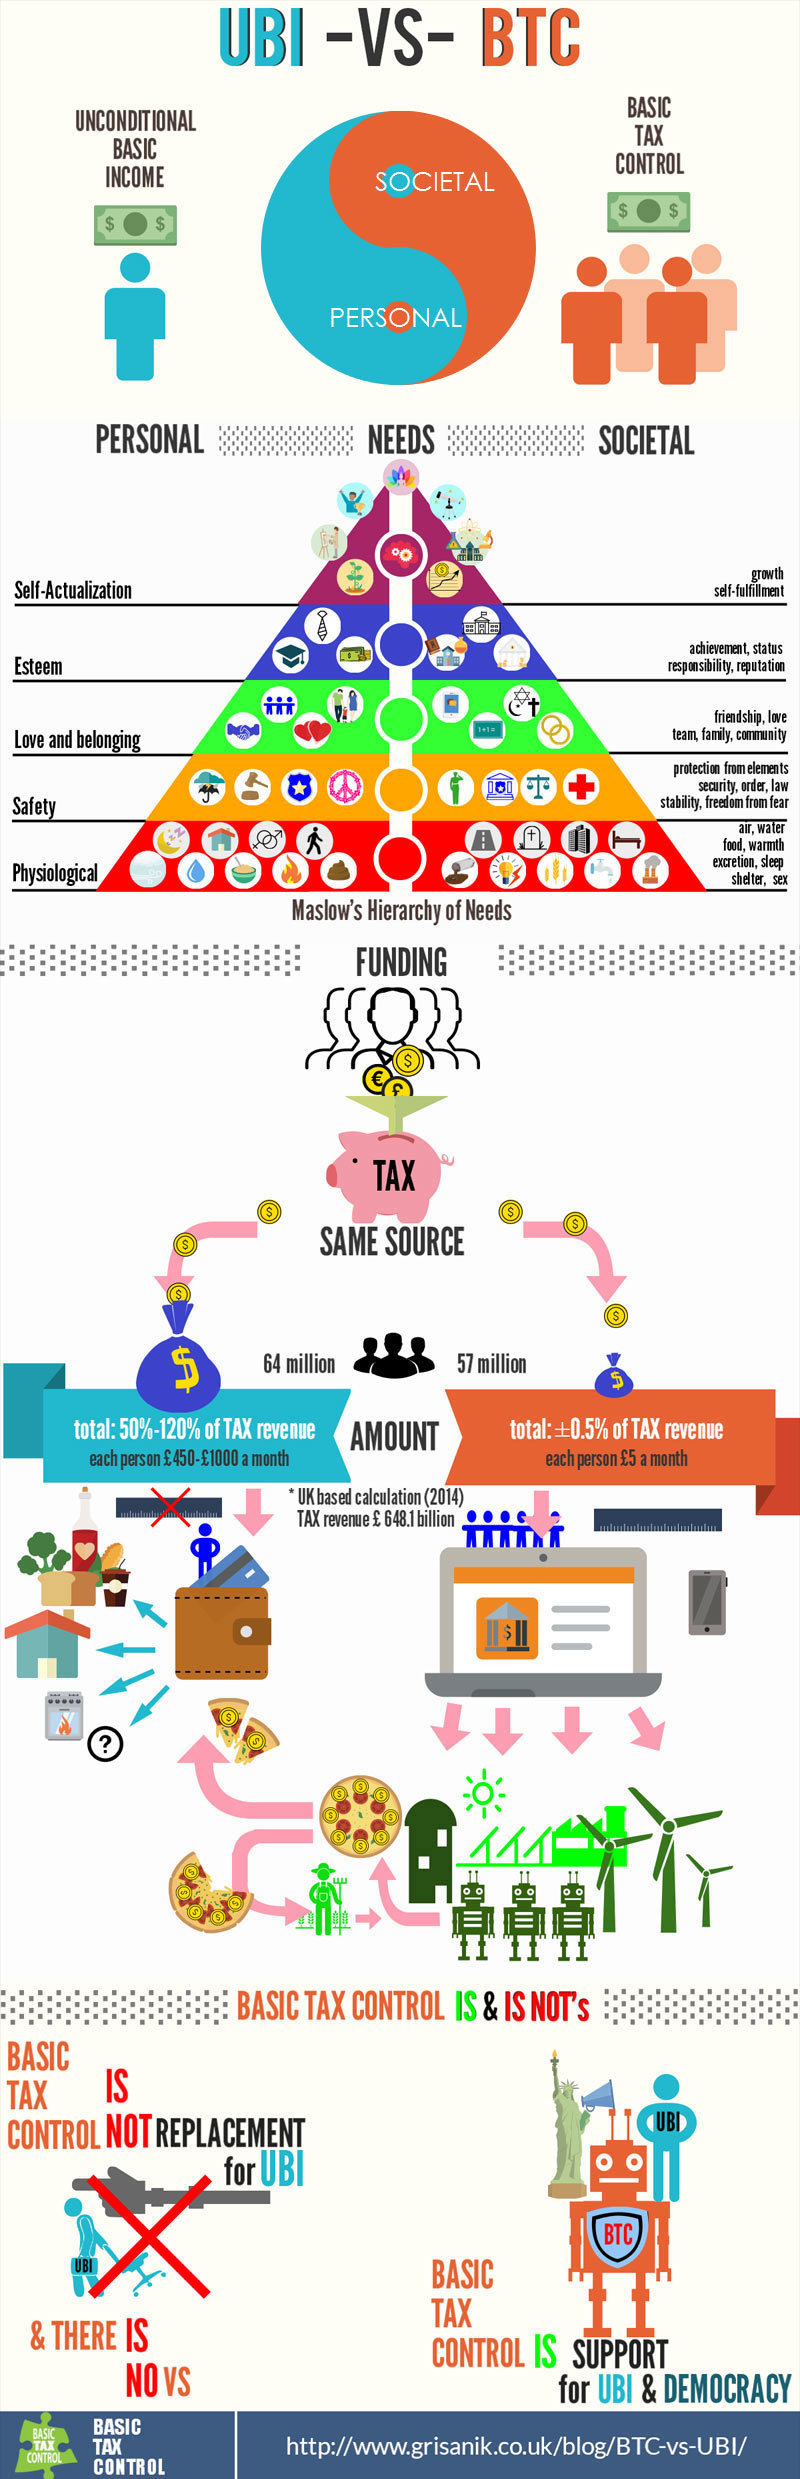 btc vs ubi infographic universal basic income infographic